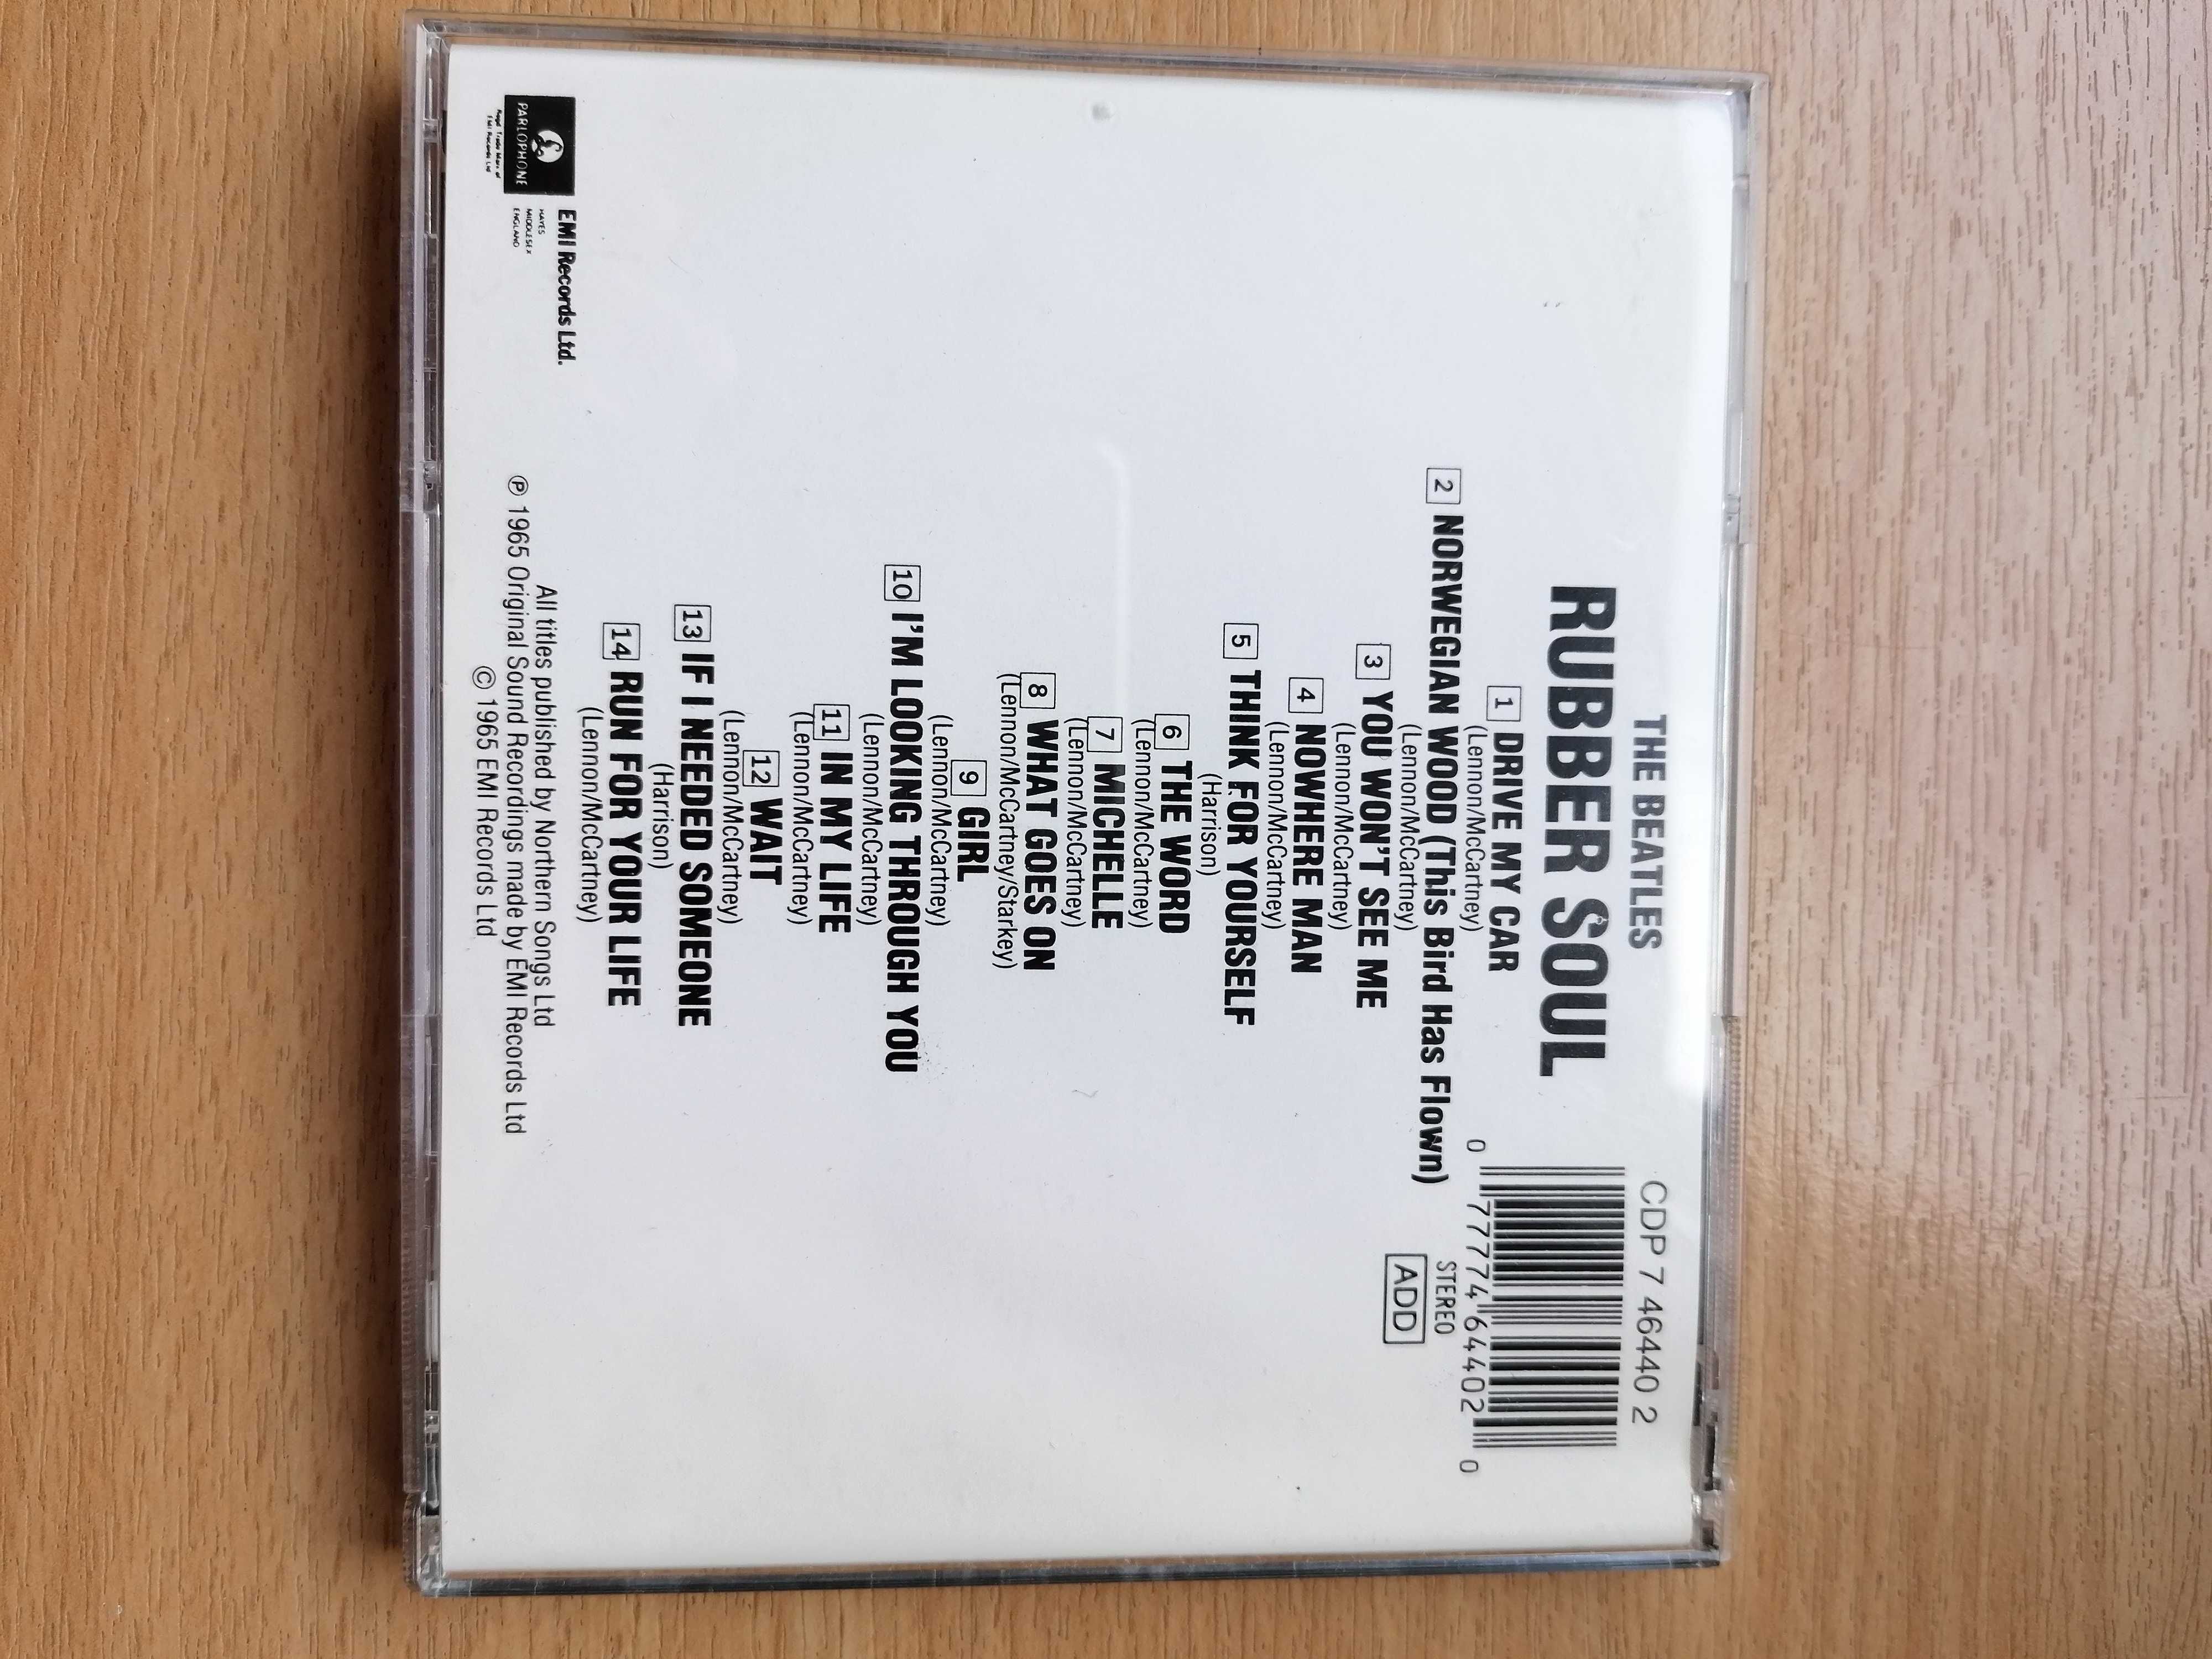 The Beatles-Rubber soul CD